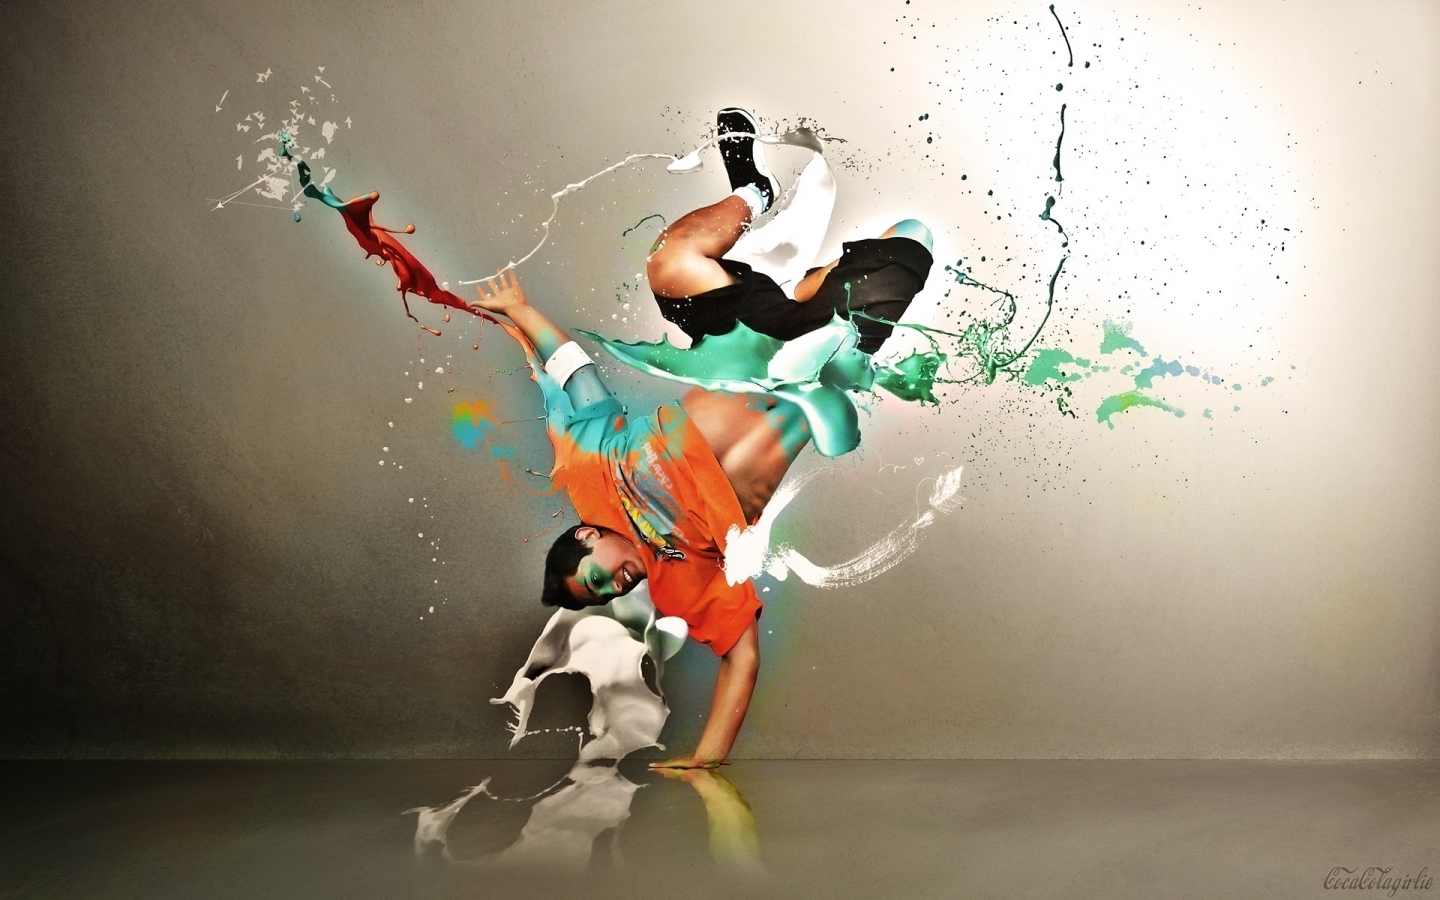 Breakdancer for 1440 x 900 widescreen resolution